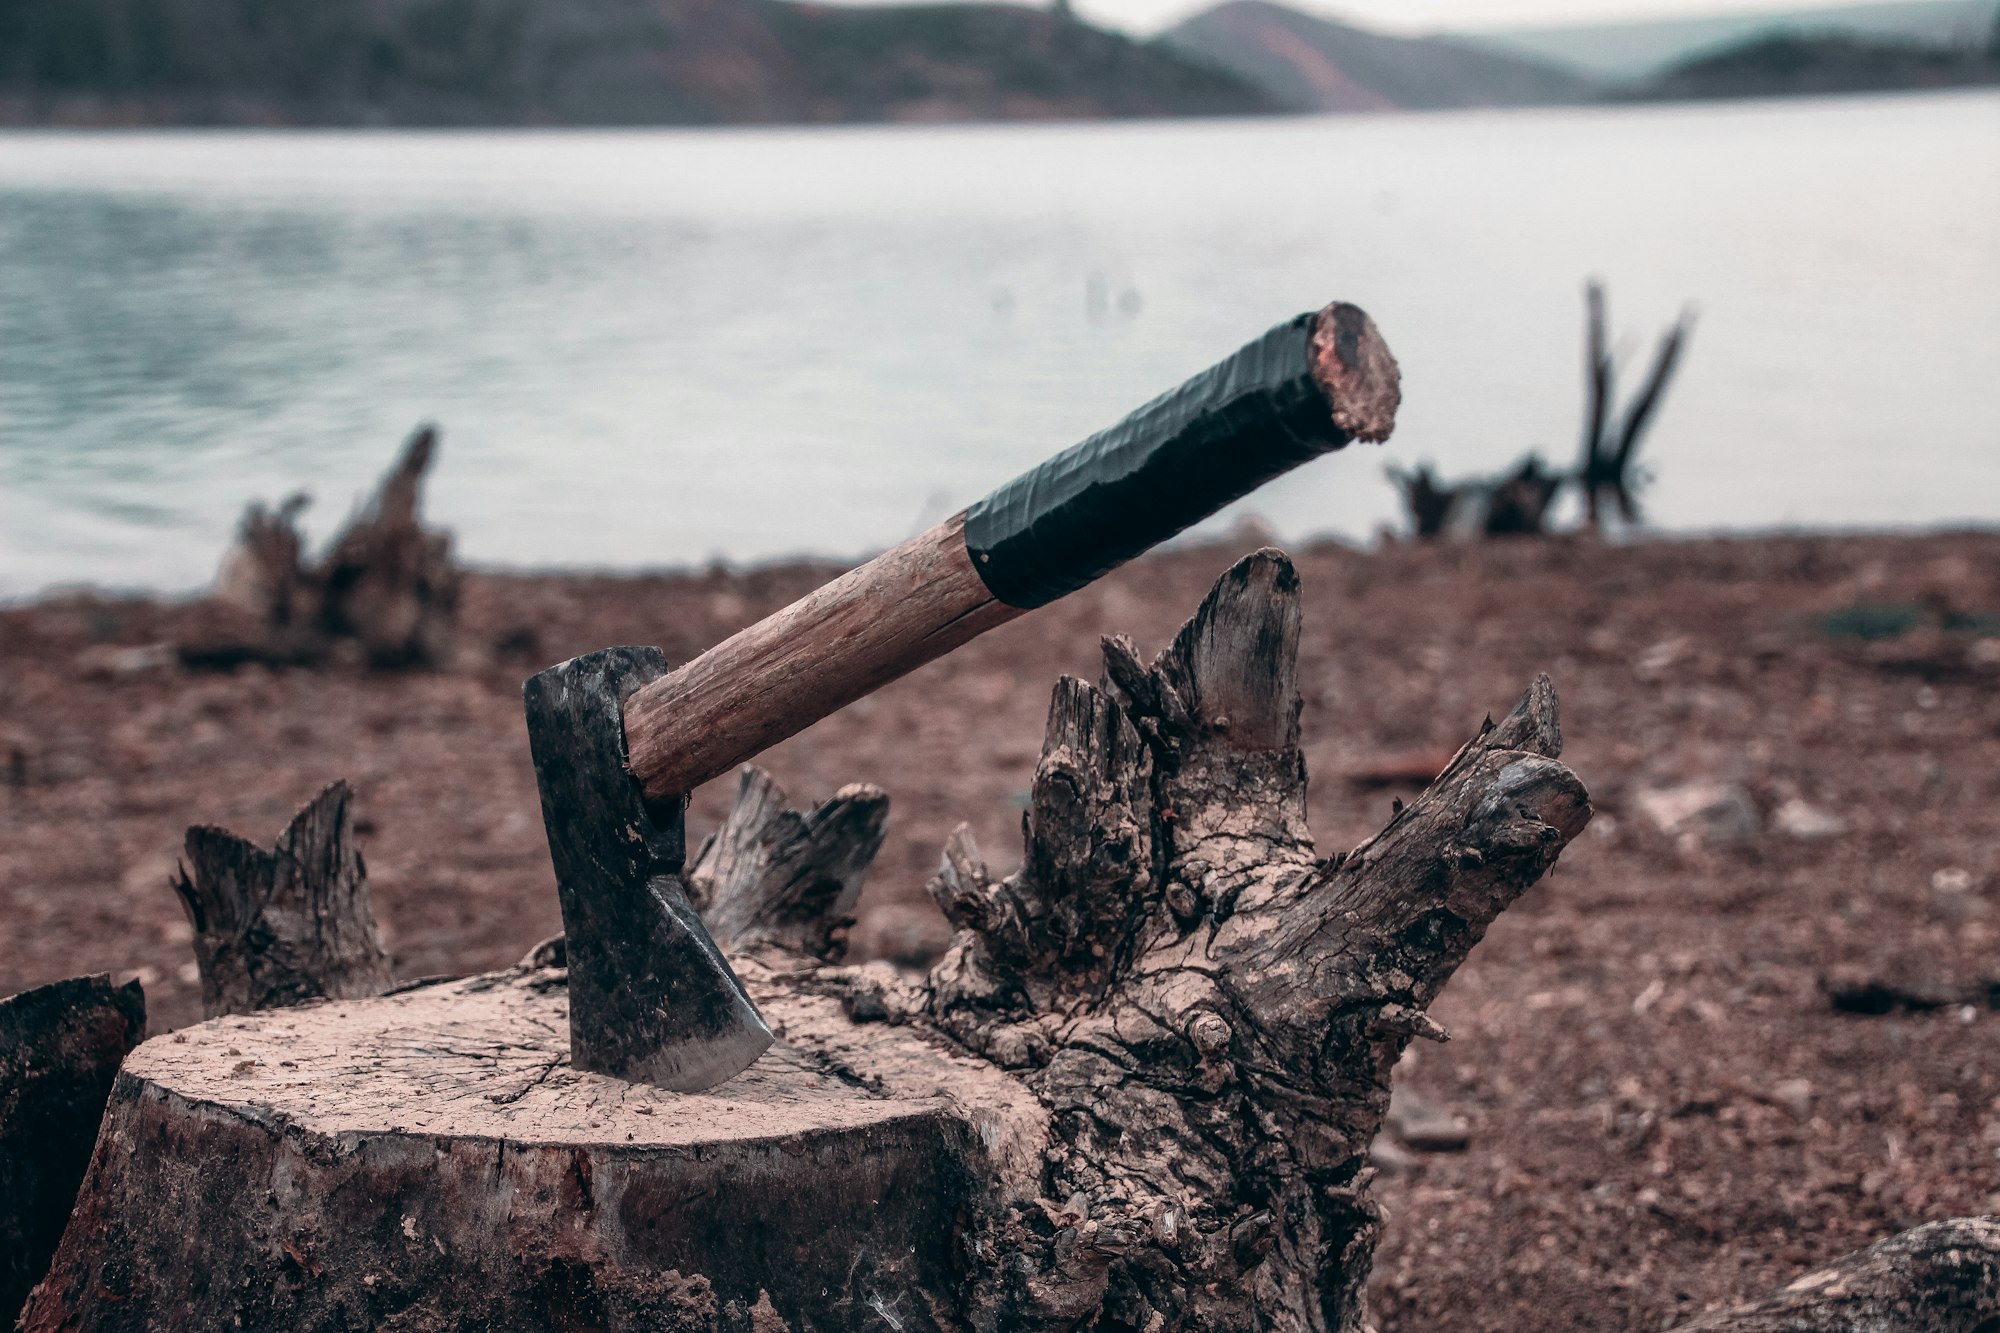 Our Daily Bread: Paul Celan, "I hear the axe has flowered"